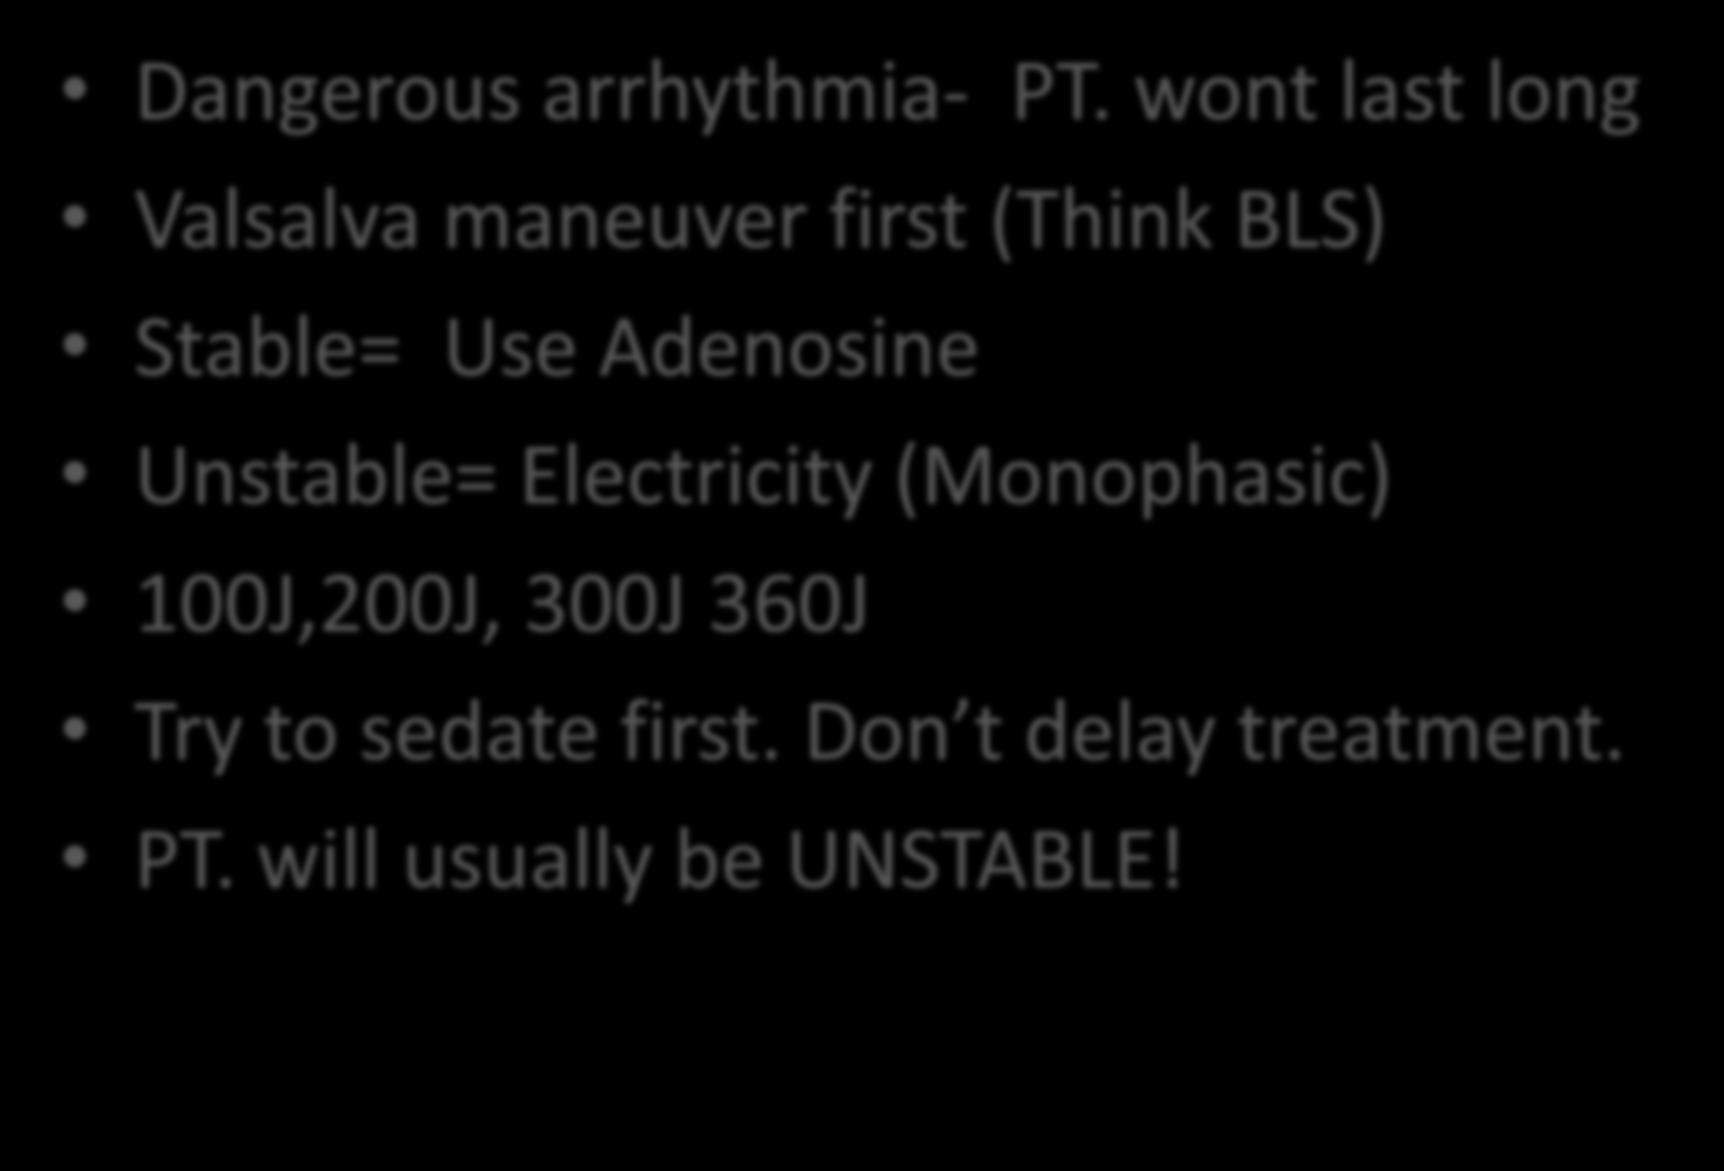 V-TACH w/pulses (Regular) Dangerous arrhythmia- PT.